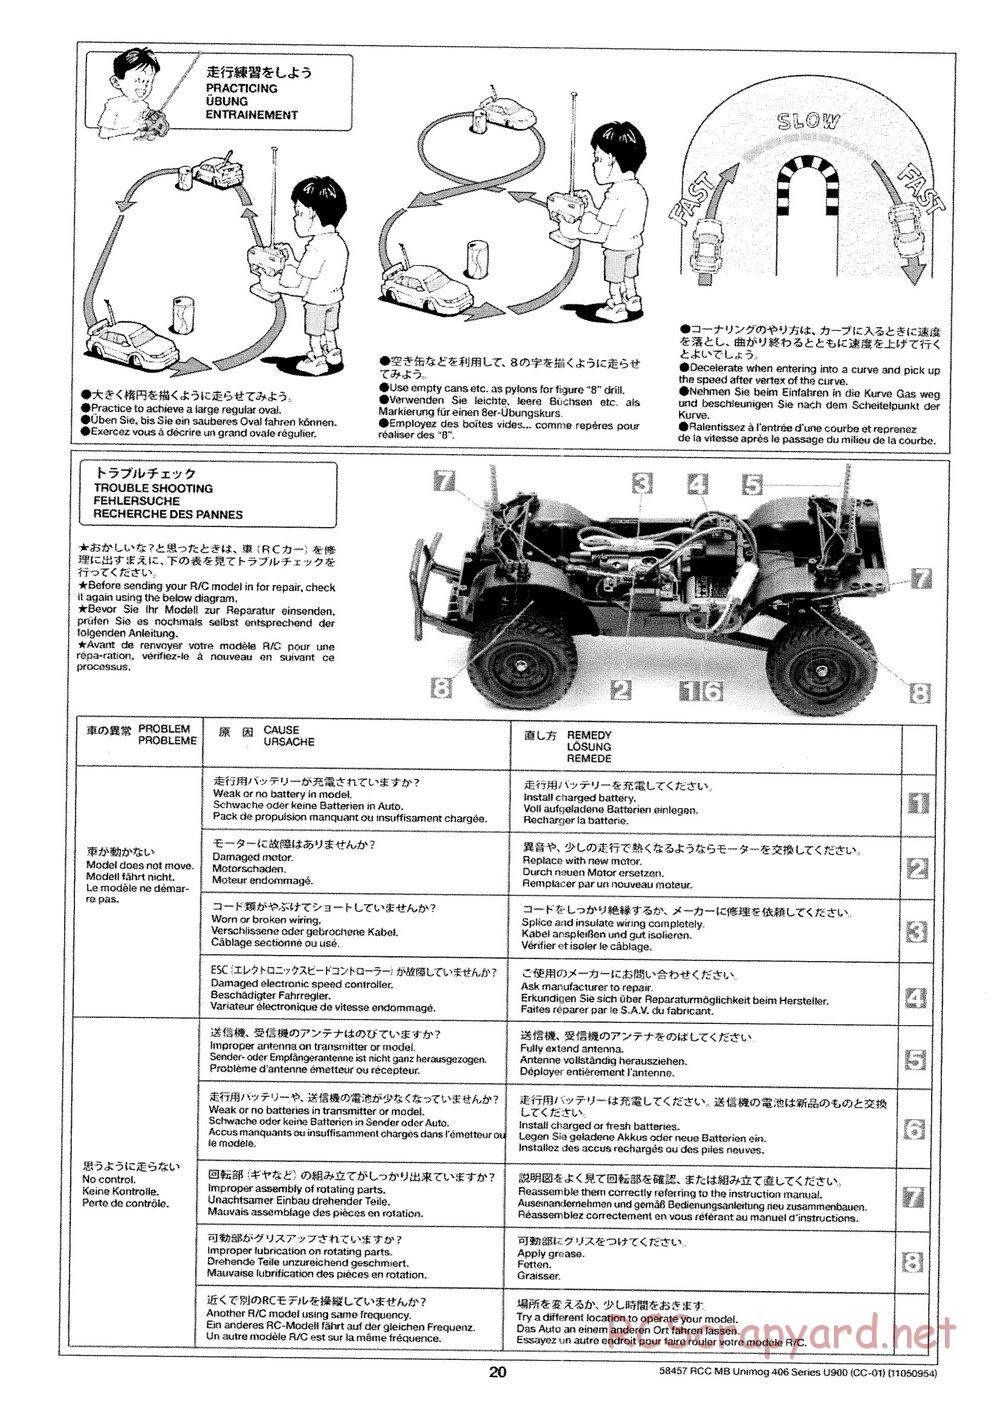 Tamiya - Mercedes-Benz Unimog 406 Series U900 - CC-01 Chassis - Manual - Page 20